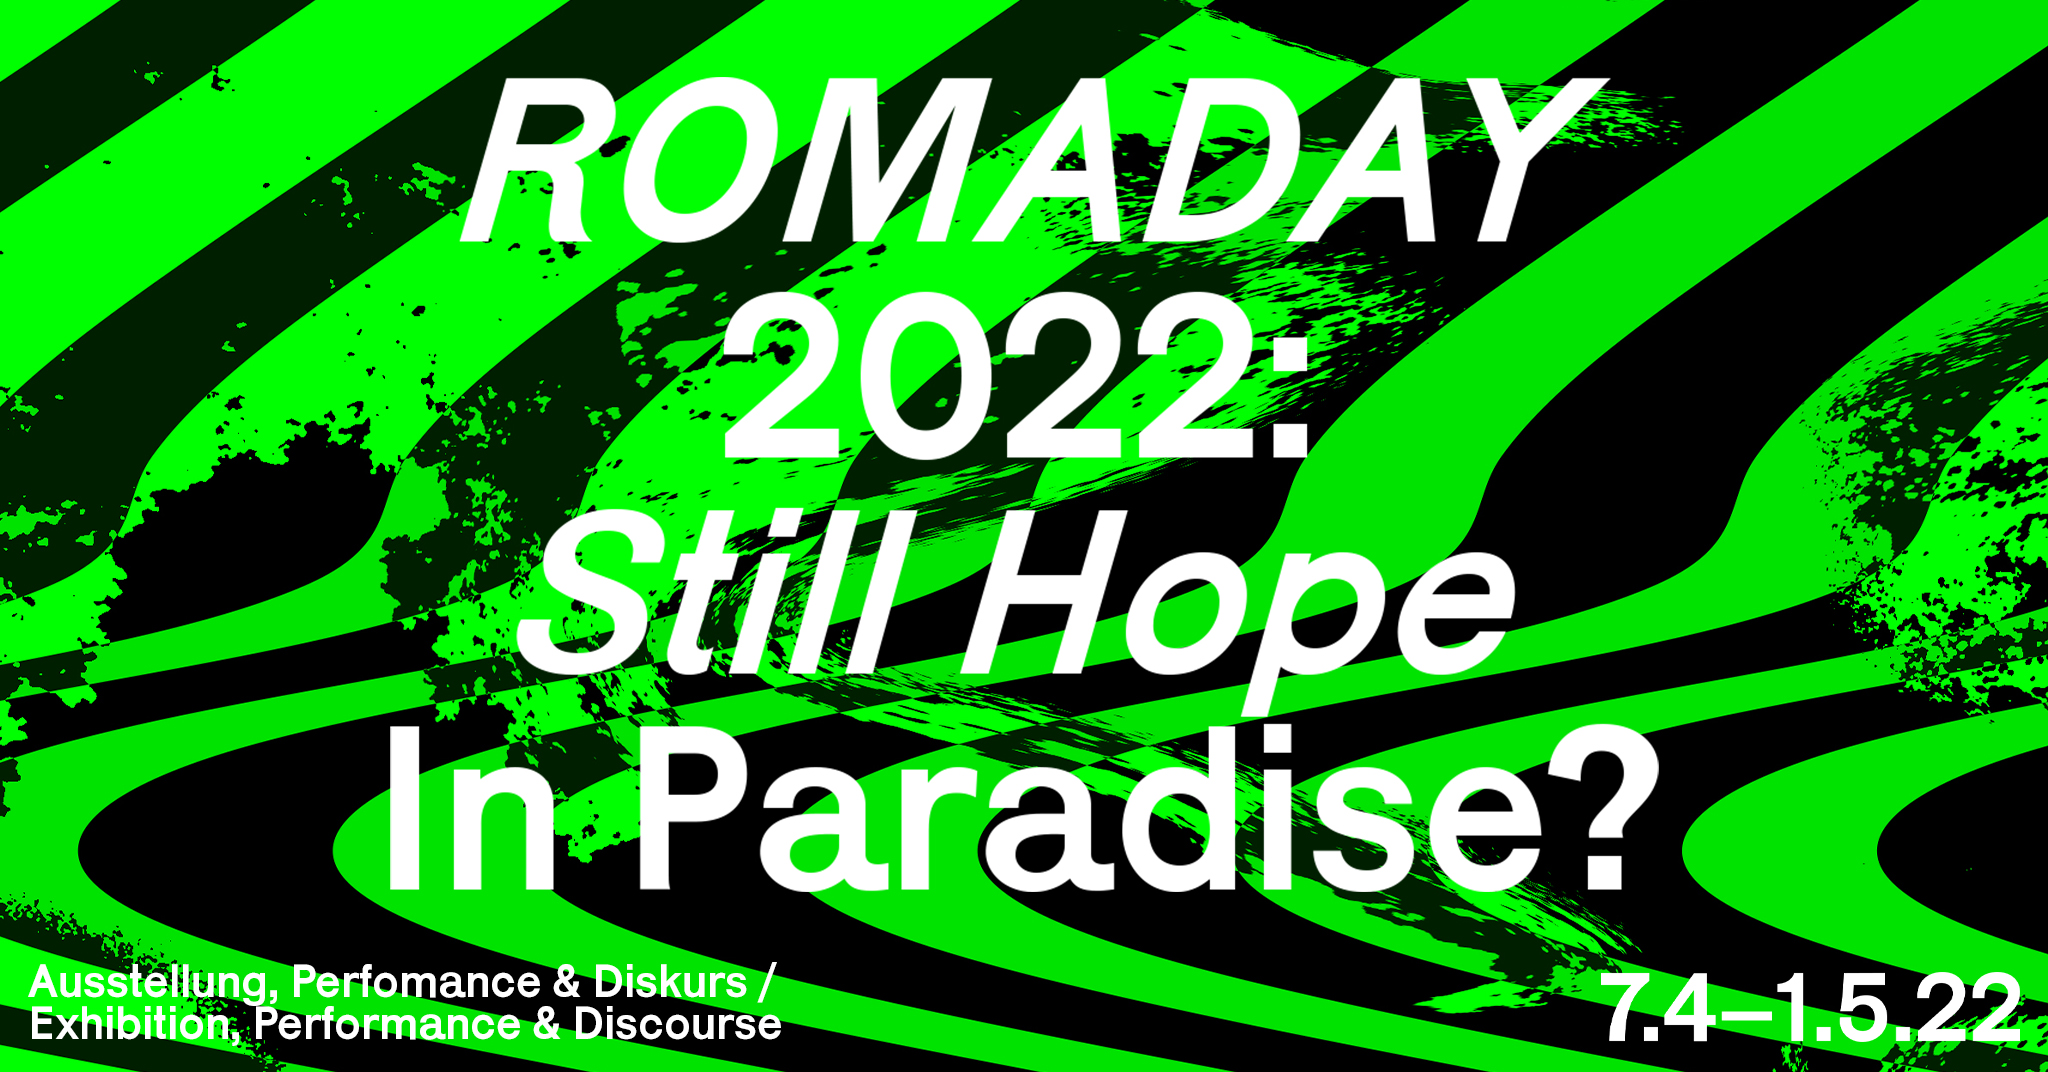 ROMADAY 2022